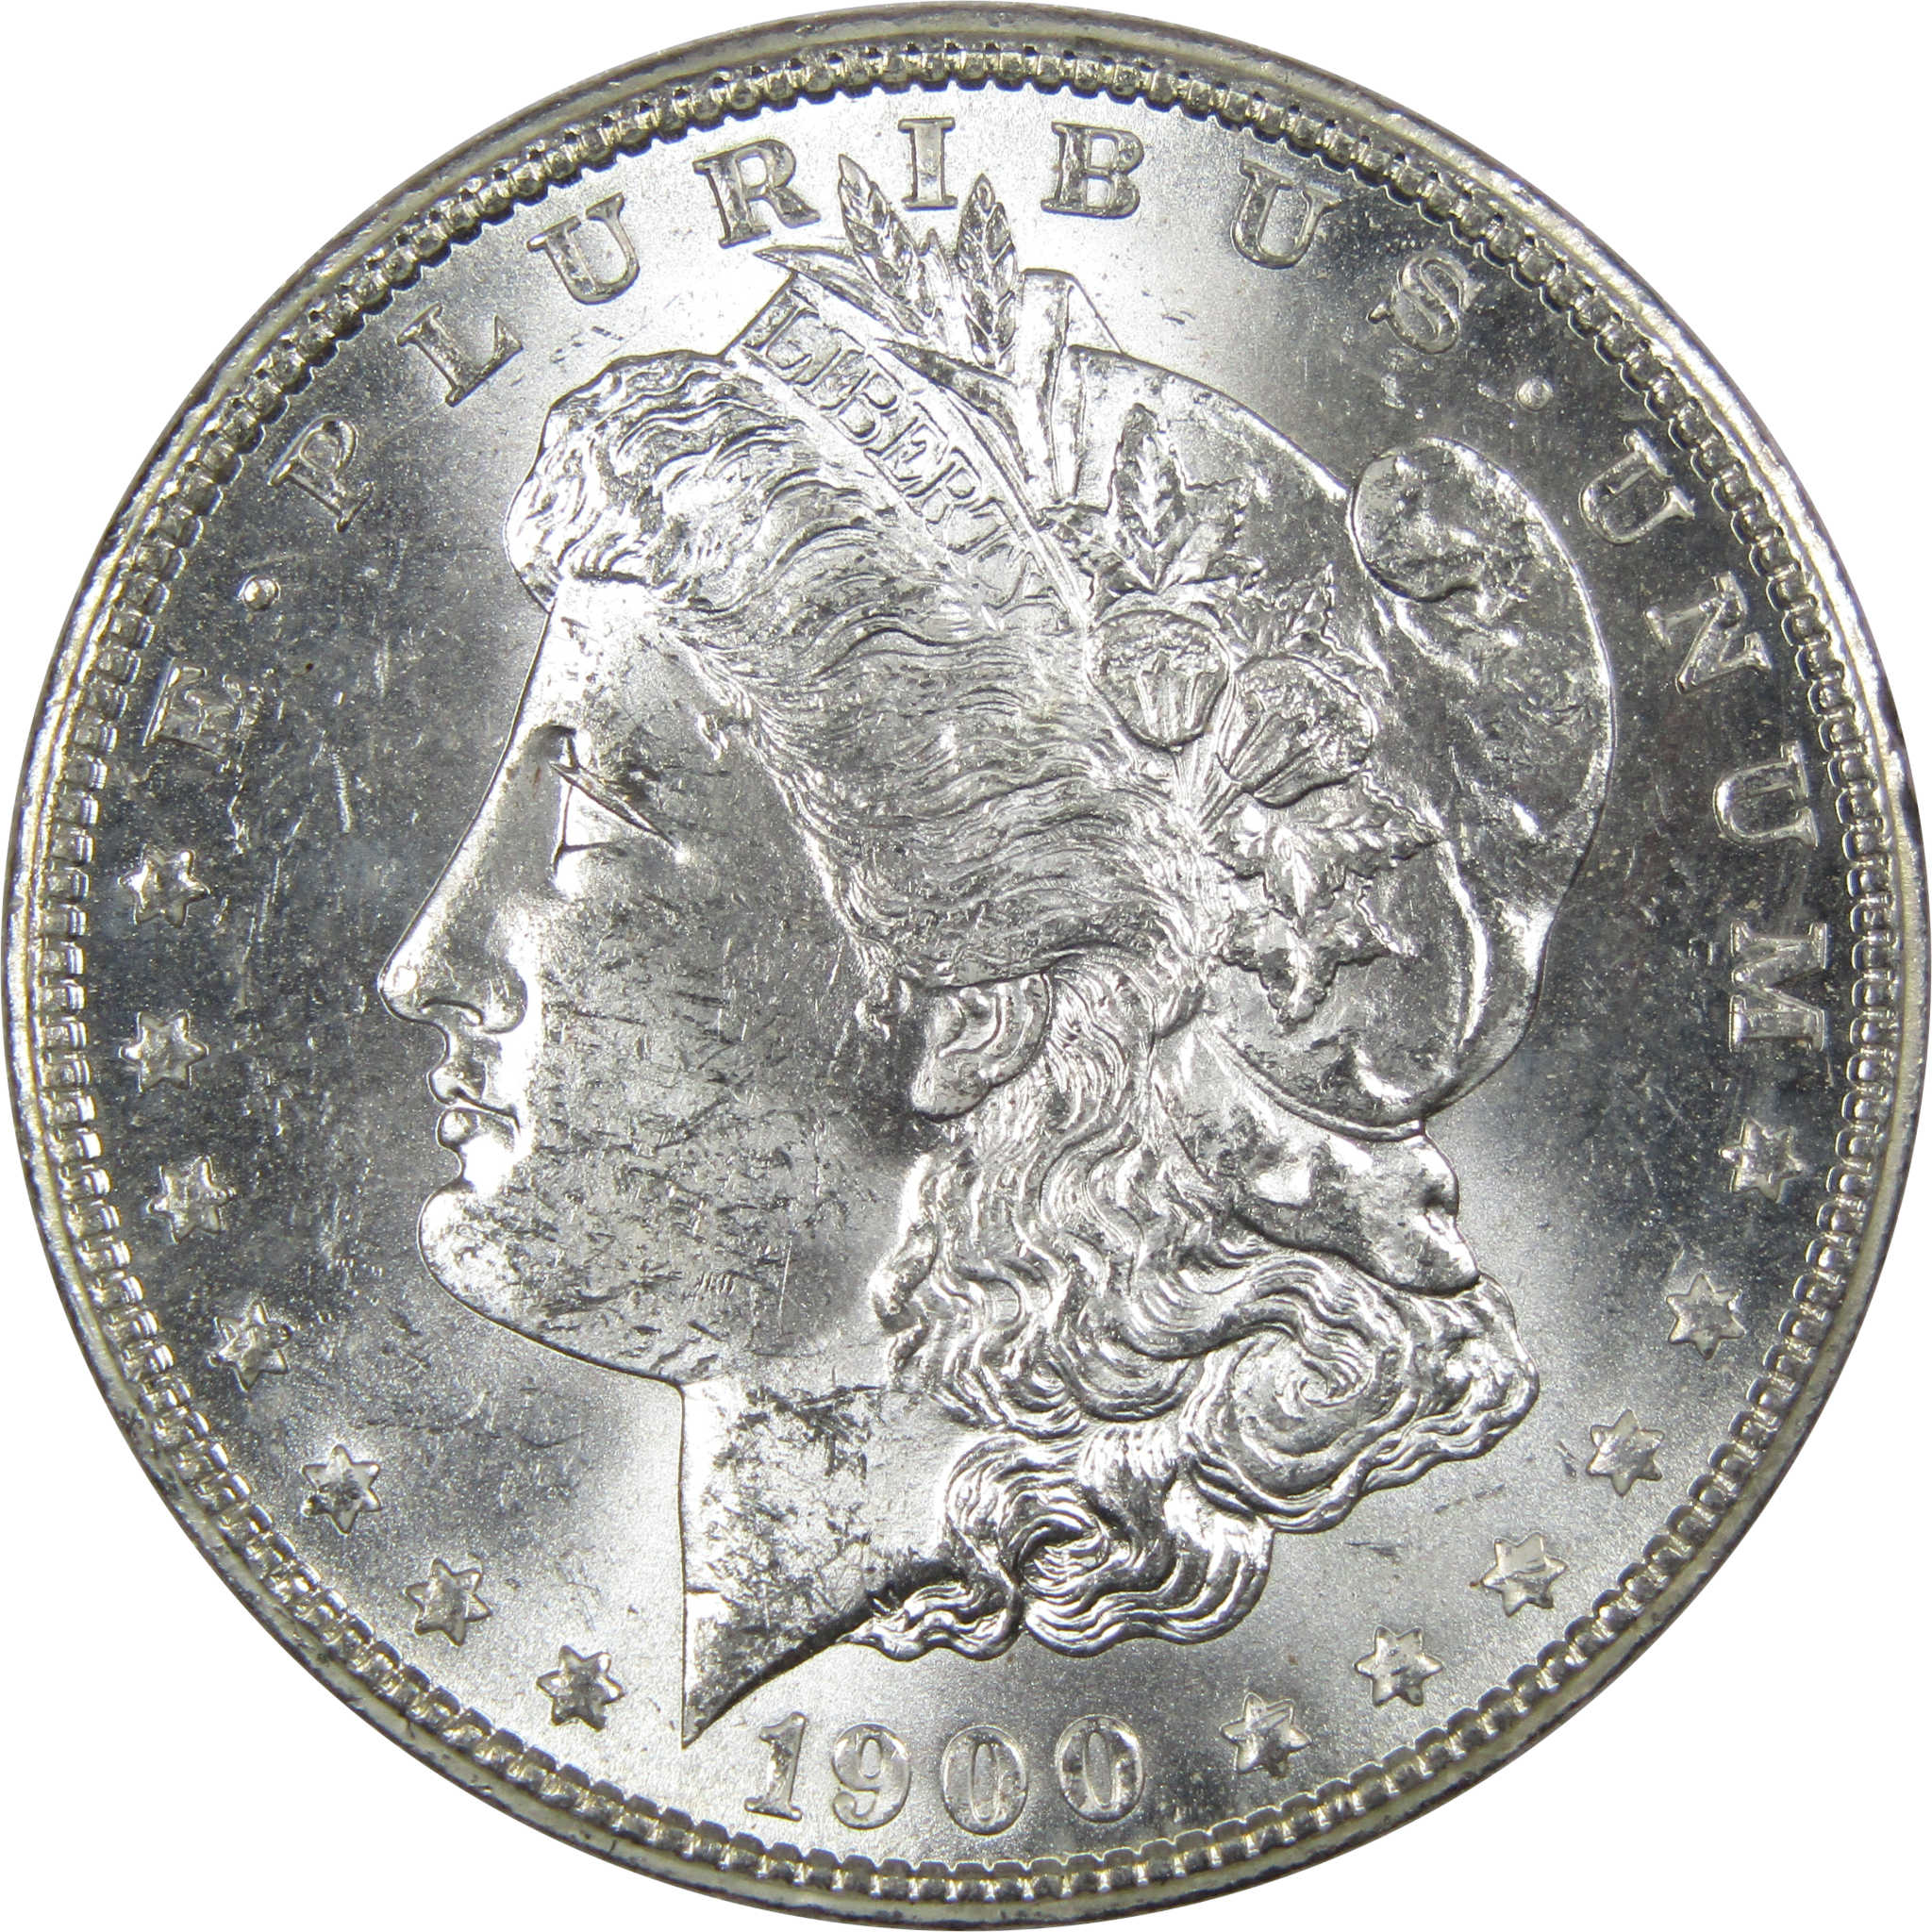 1900 O Morgan Dollar BU Uncirculated Mint State 90% Silver SKU:IPC9768 - Morgan coin - Morgan silver dollar - Morgan silver dollar for sale - Profile Coins &amp; Collectibles